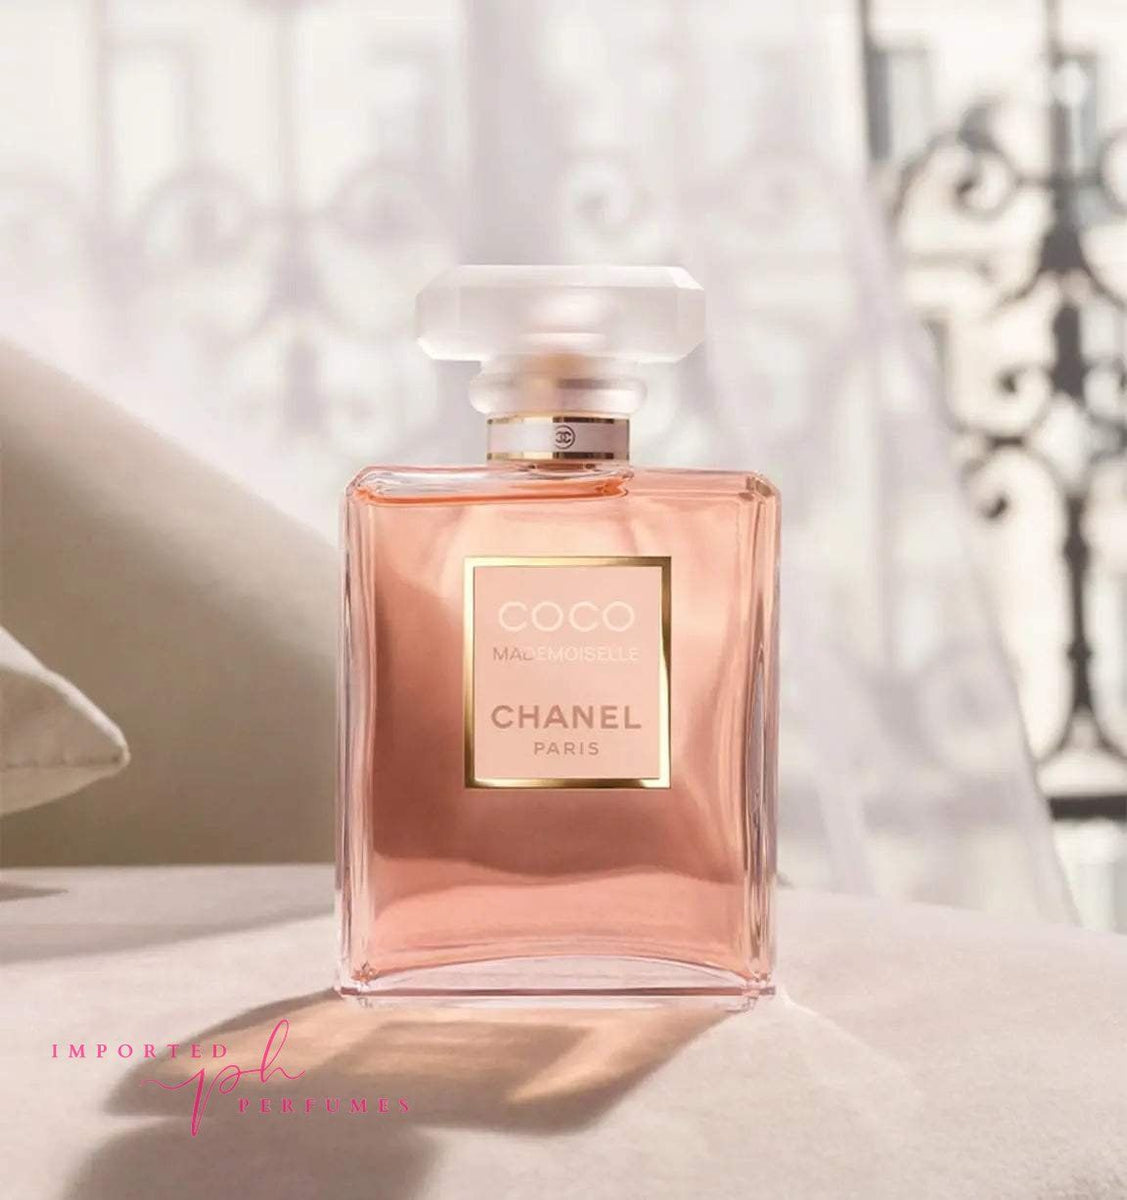 Coco Chanel perfume-100ml - Inspired fragrances